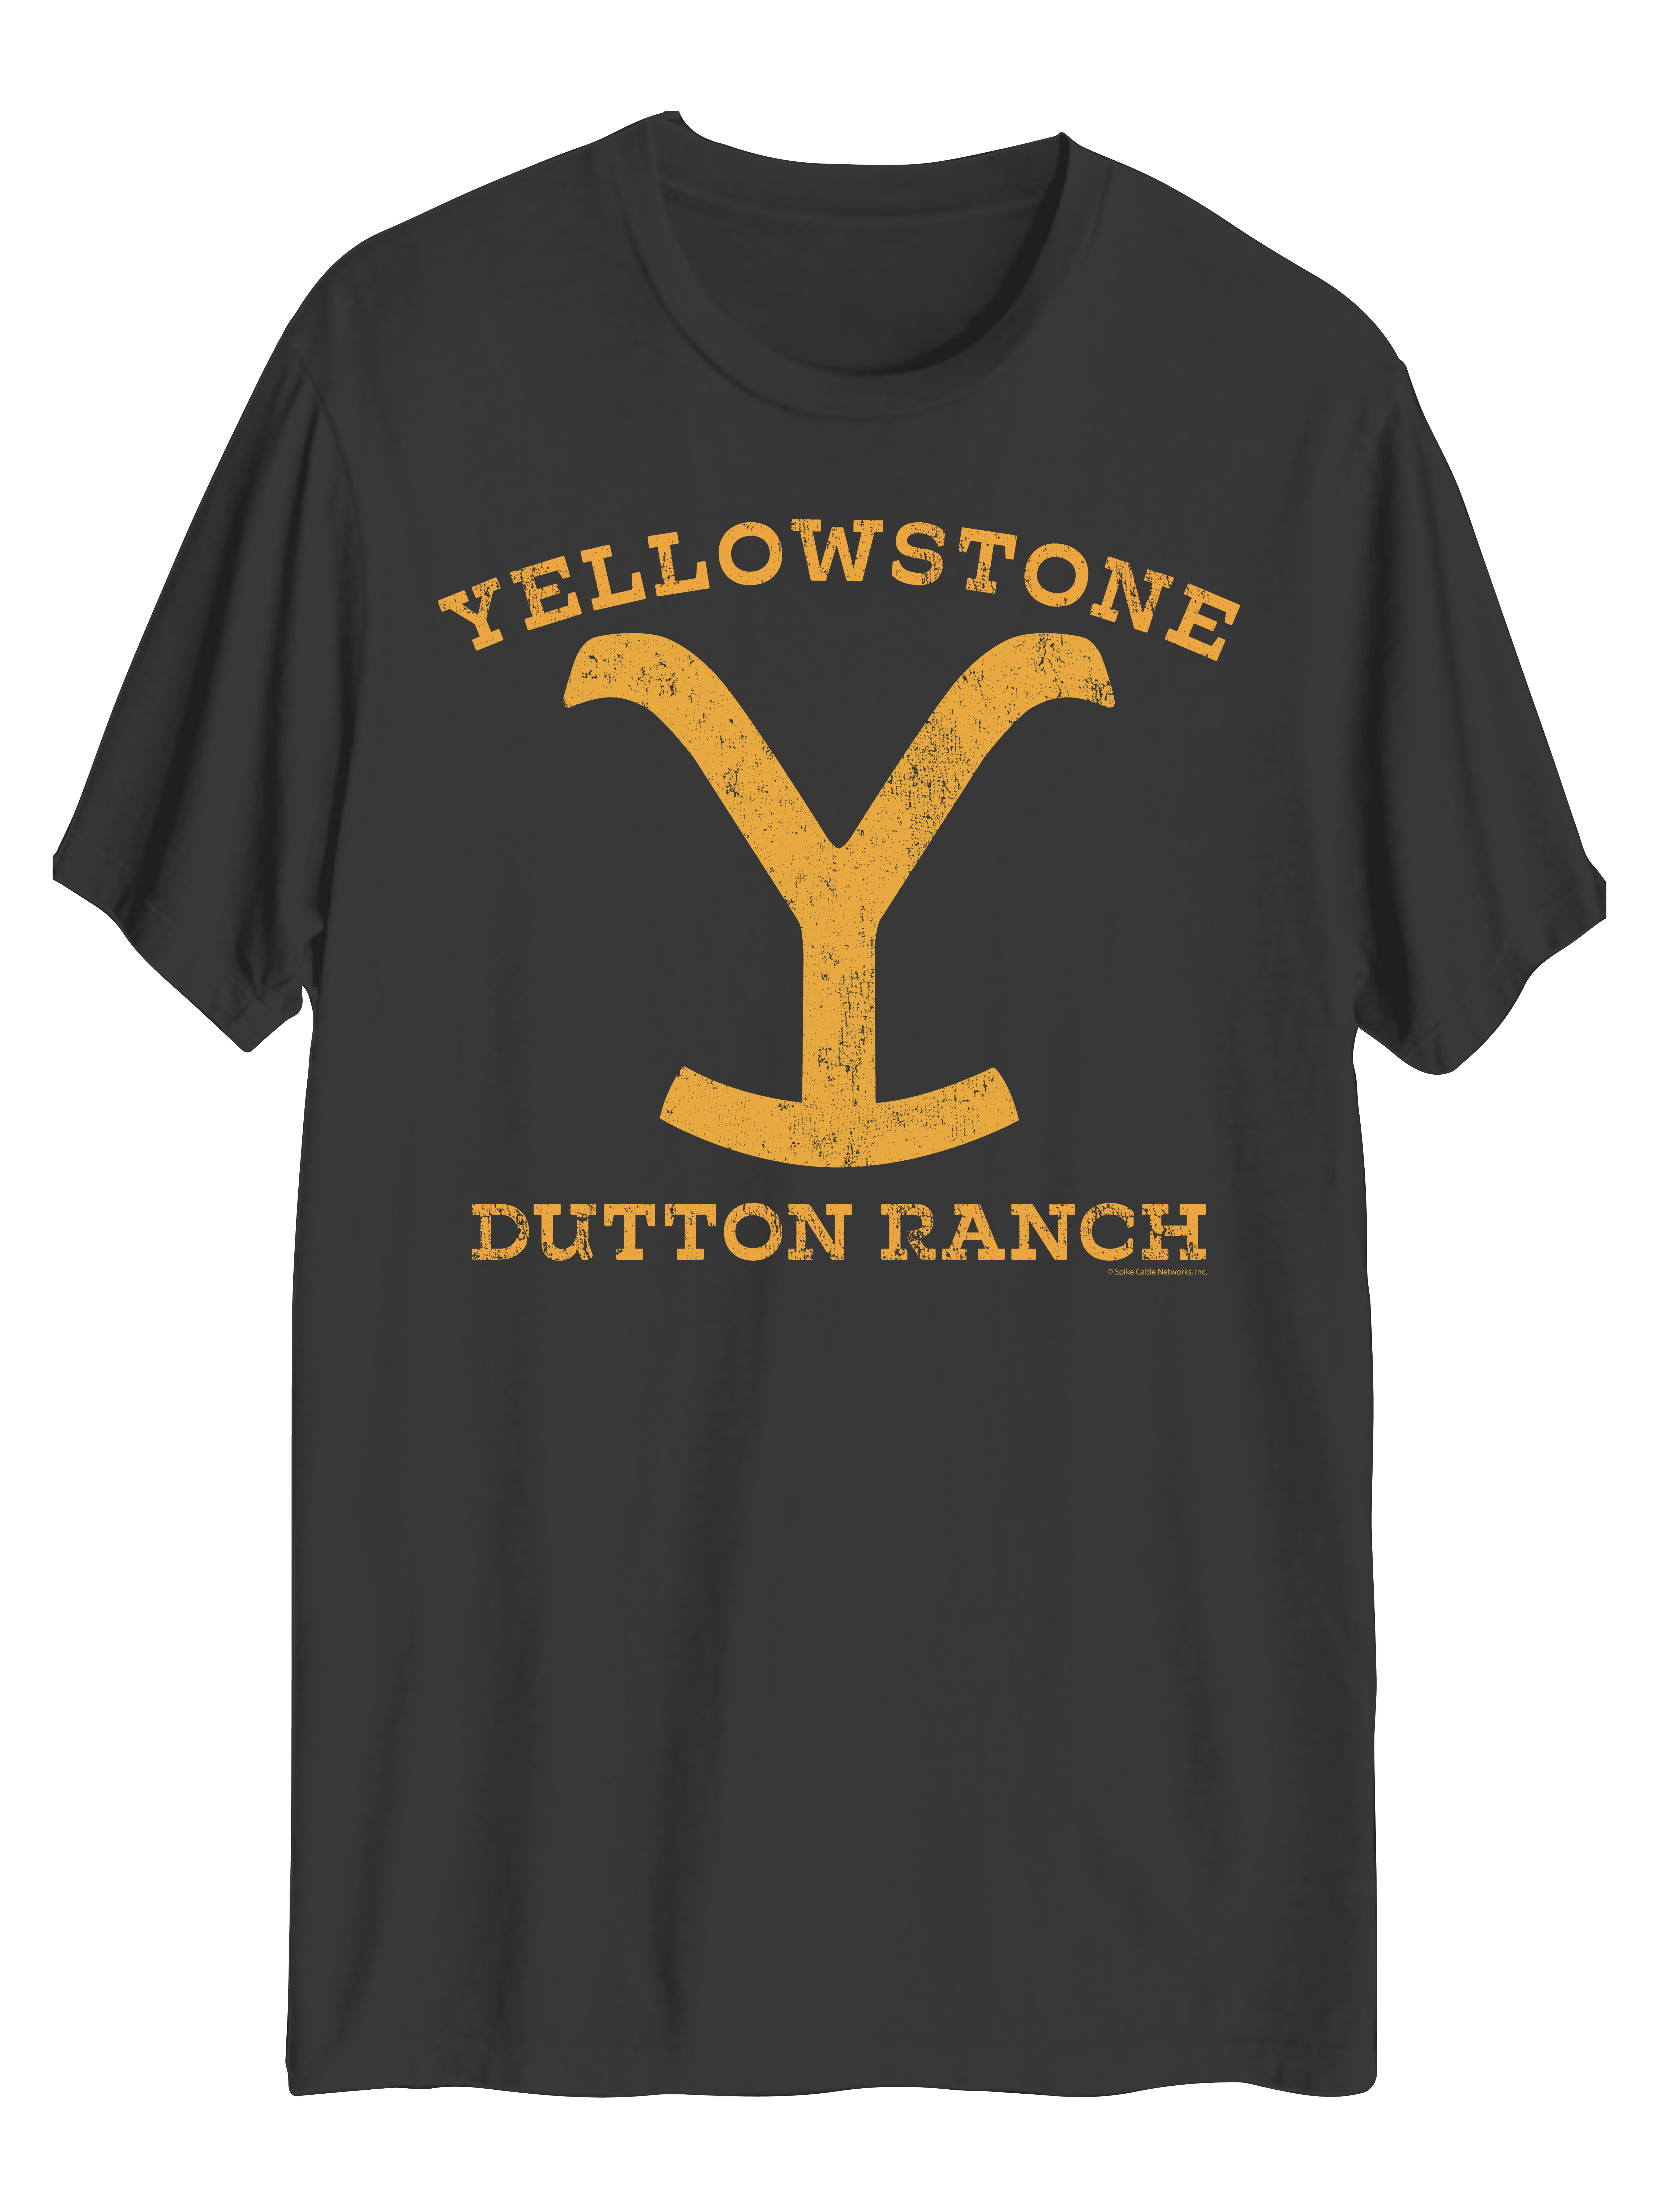 Yellowstone Dutton Ranch Bravado Men's and Big Men's Graphic T-shirt - image 1 of 1